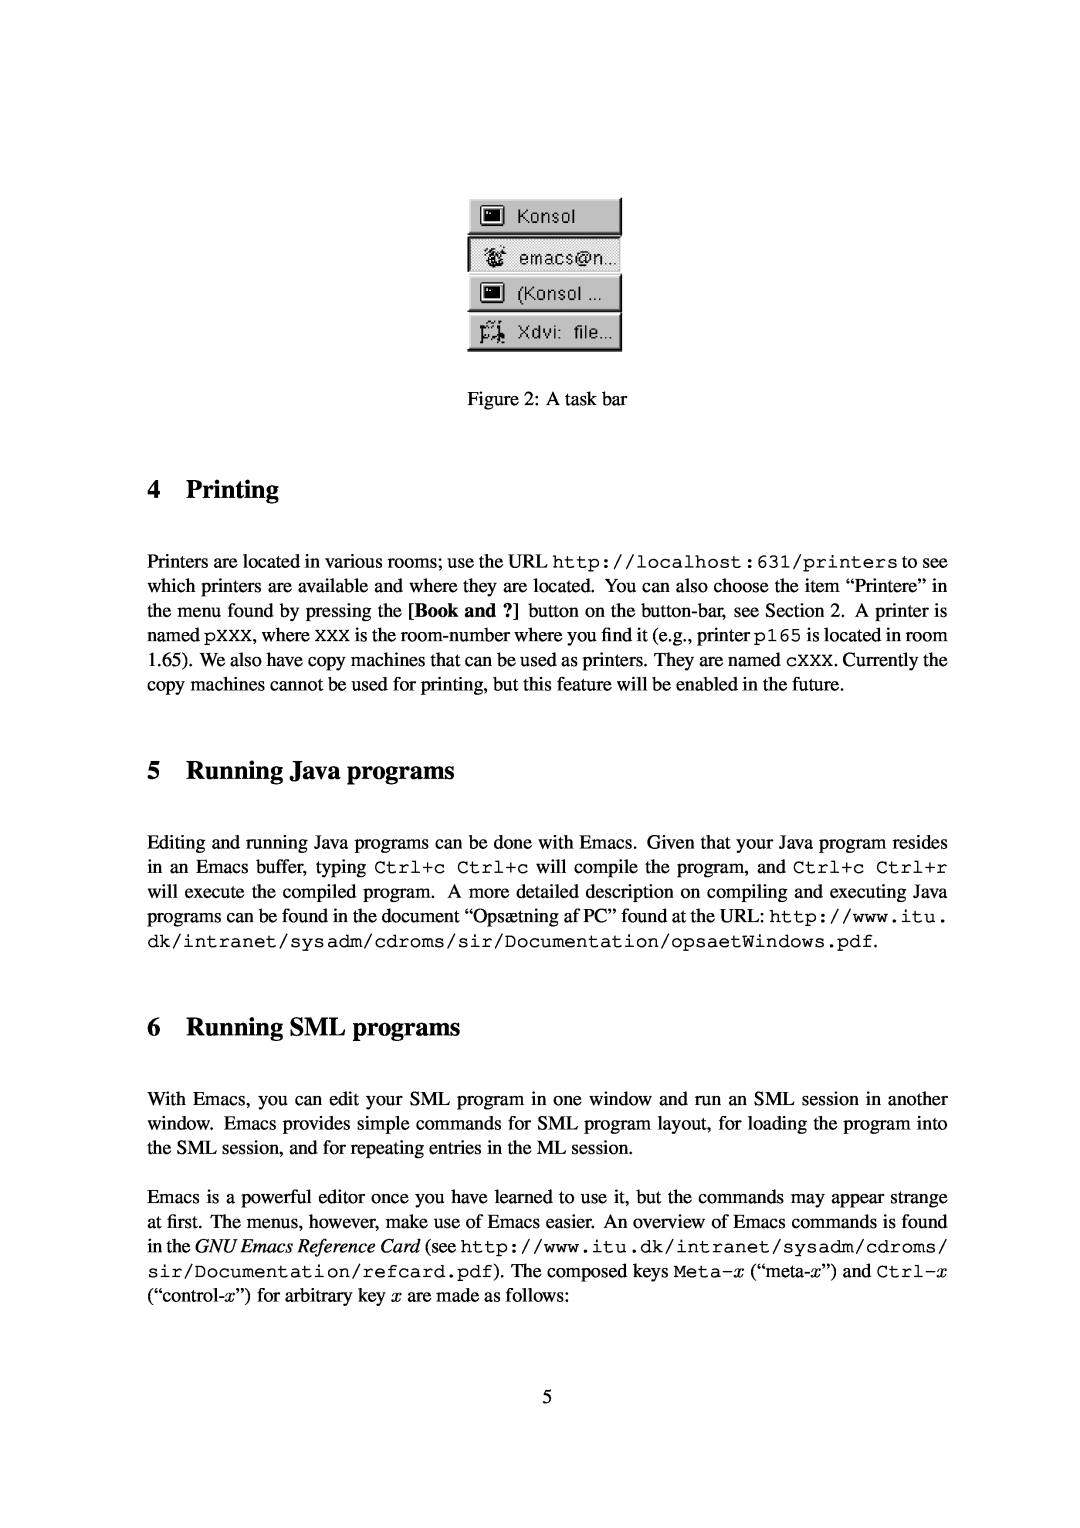 Spring Switzerland GmbH 2000 manual Printing, Running Java programs, Running SML programs 